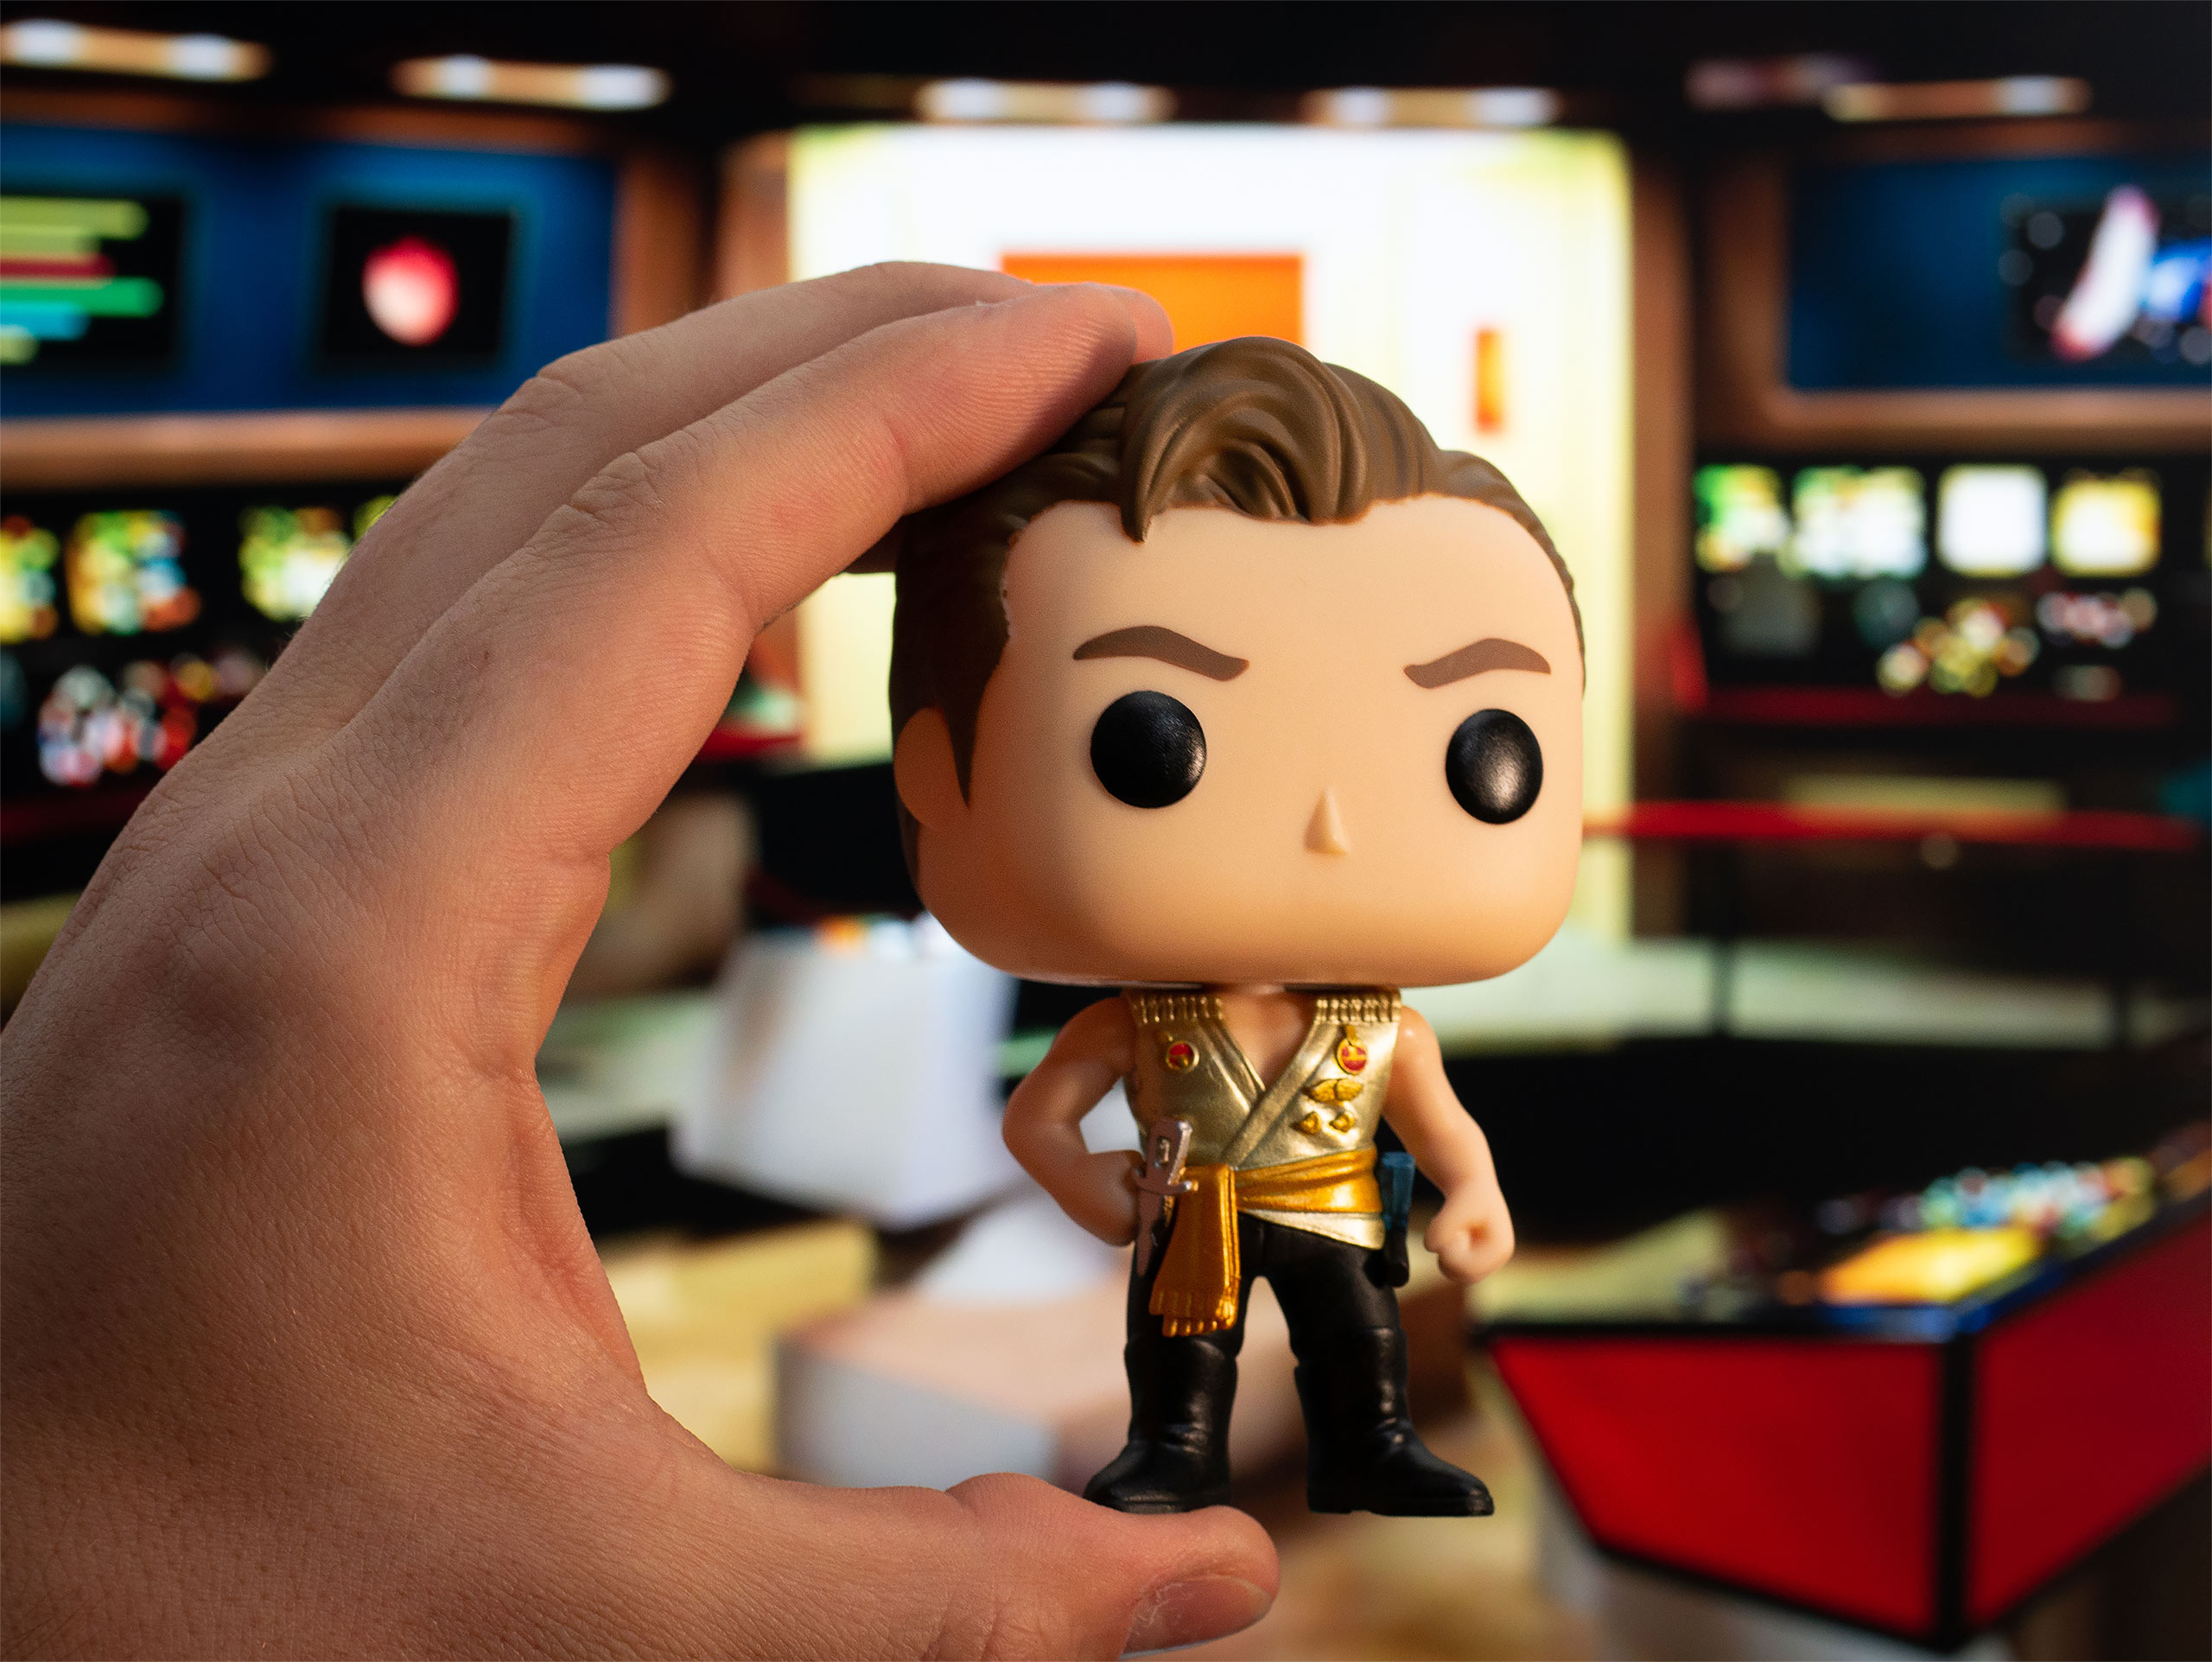 Star Trek - Captain Kirk Funko Pop Figur